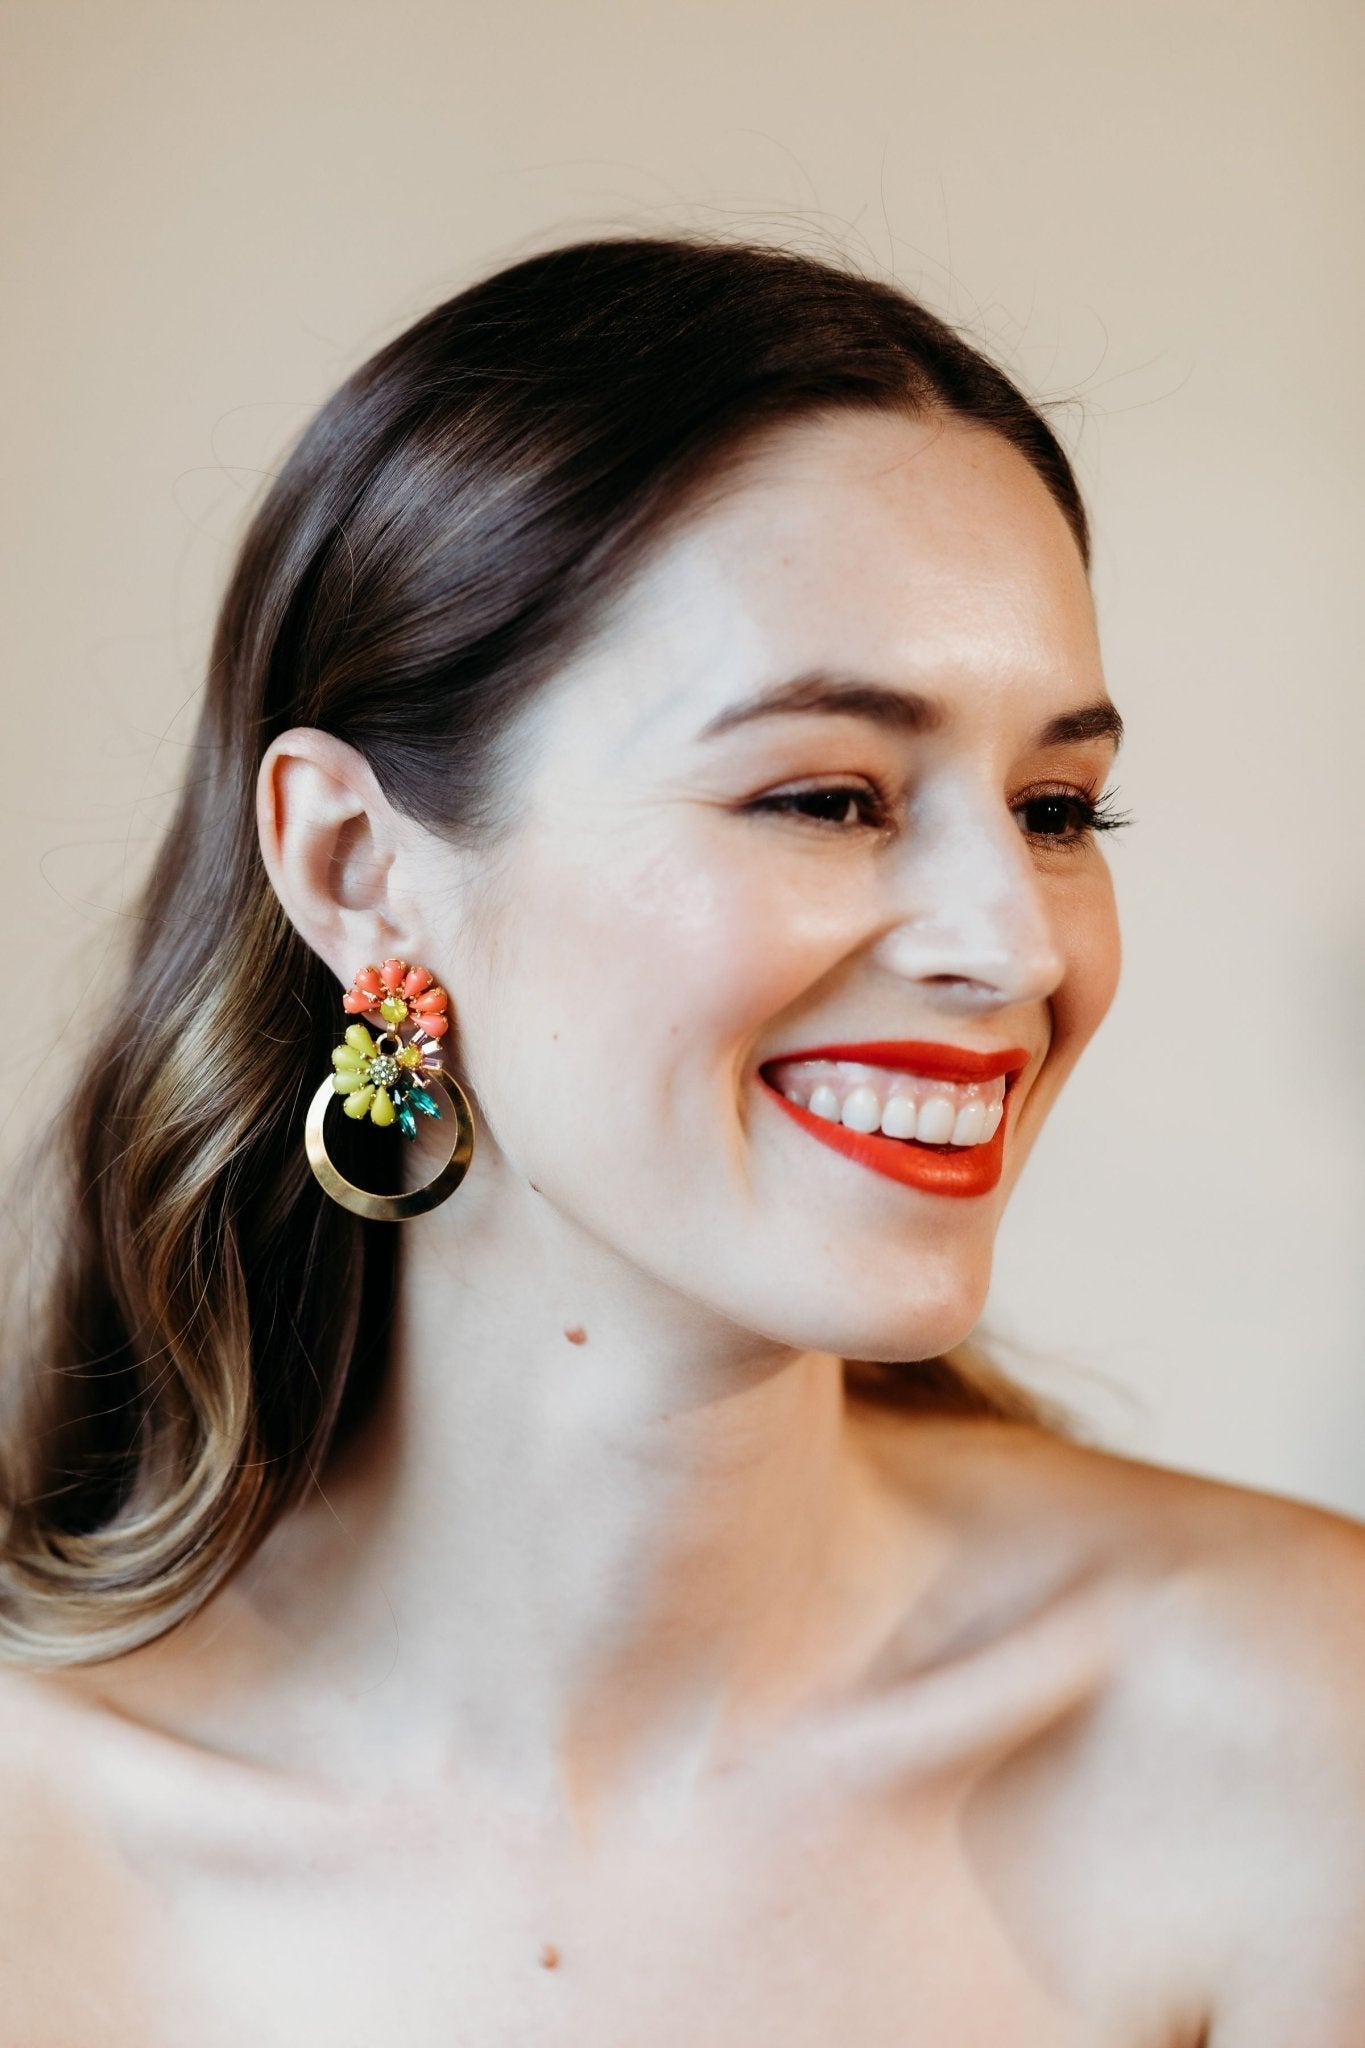 Elizabeth Cole Jewelry - Nicolette Earrings, Multi Color